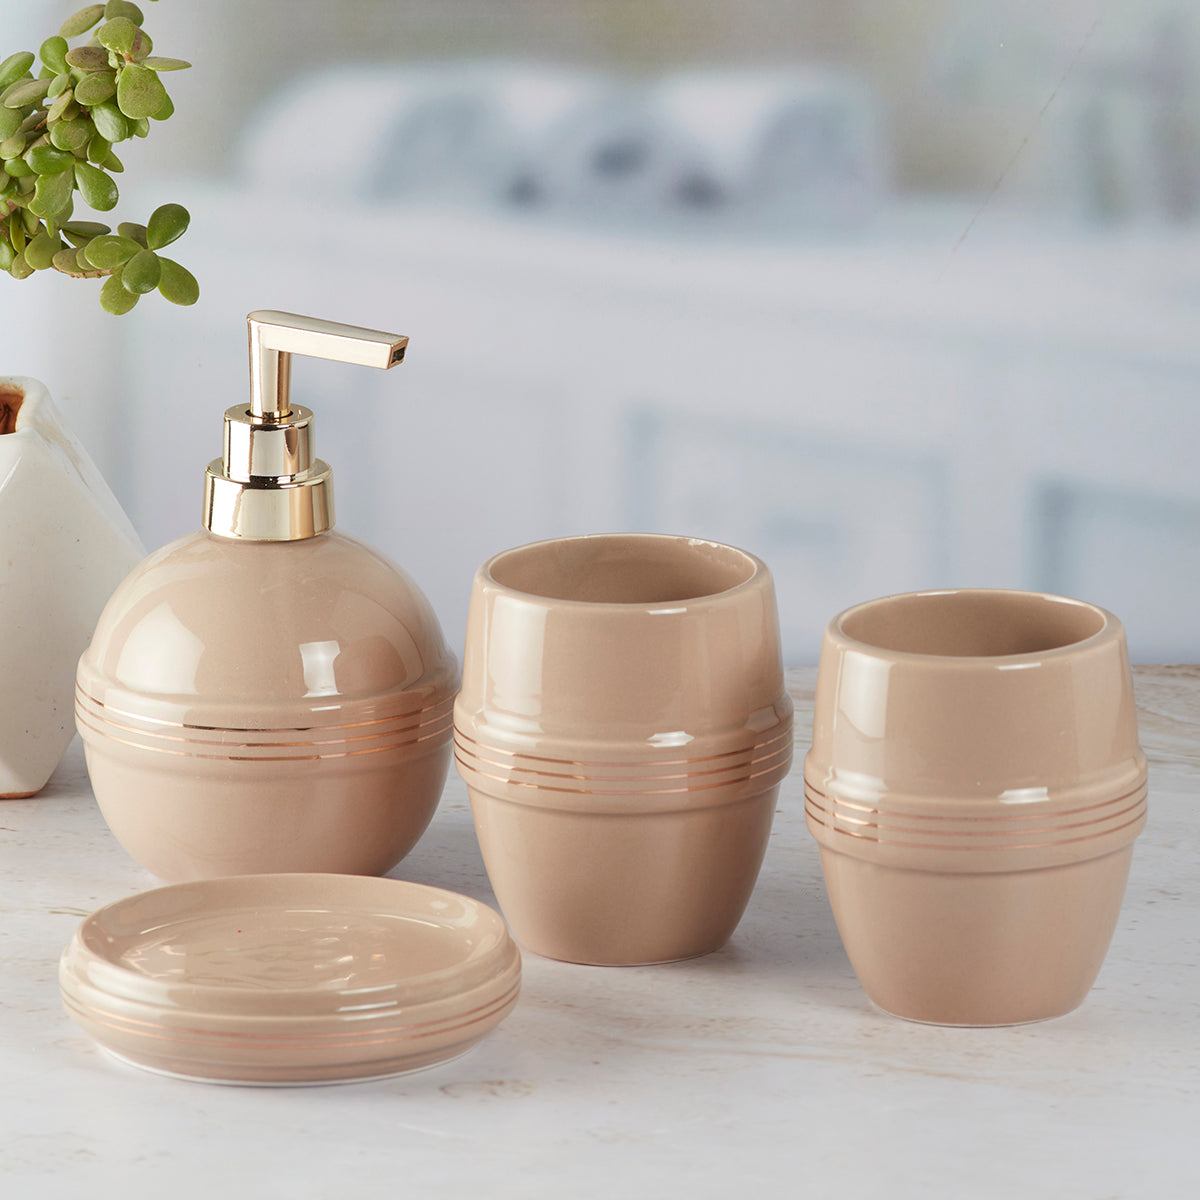 Ceramic Bathroom Accessories Set of 4 Bath Set with Soap Dispenser (5758)